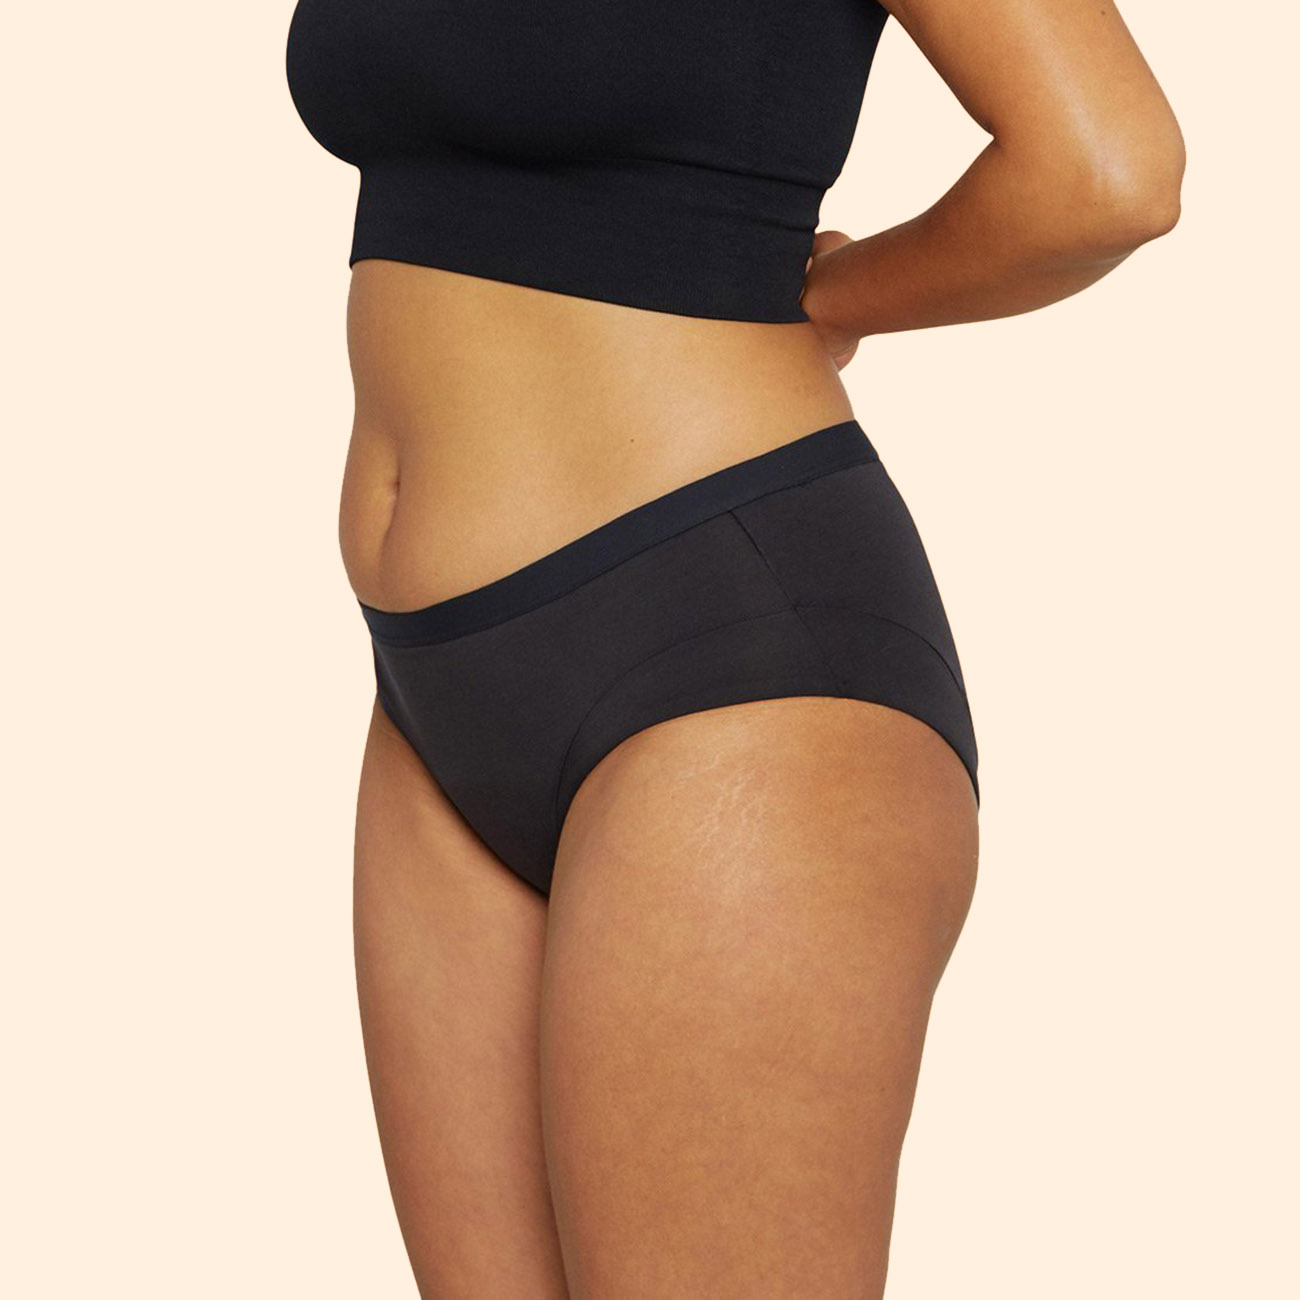 Thinx for All™ Women's Bikini Period Underwear, Super Absorbency, Black